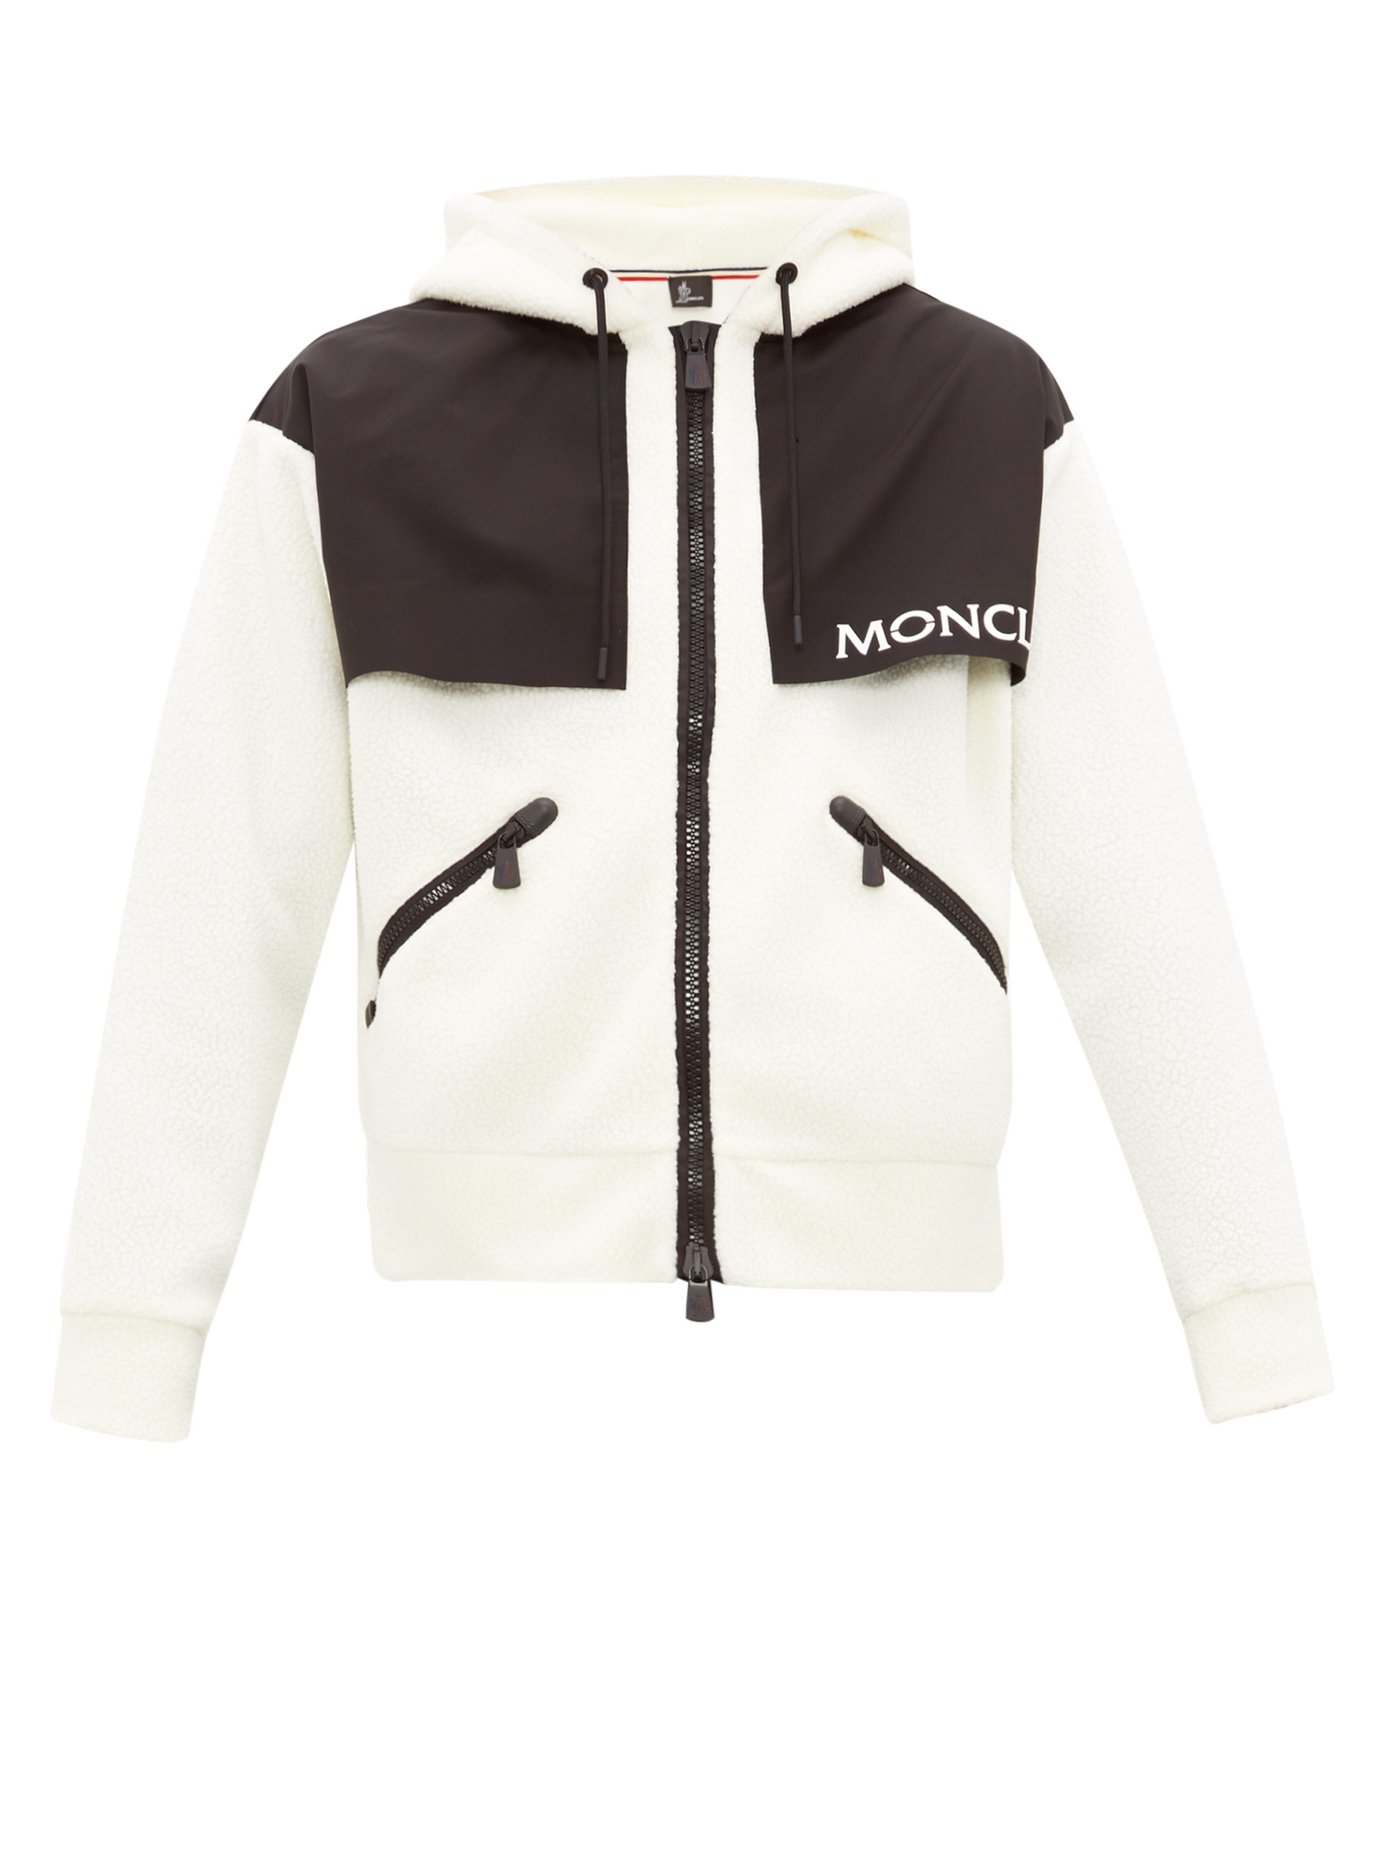 moncler ski jackets